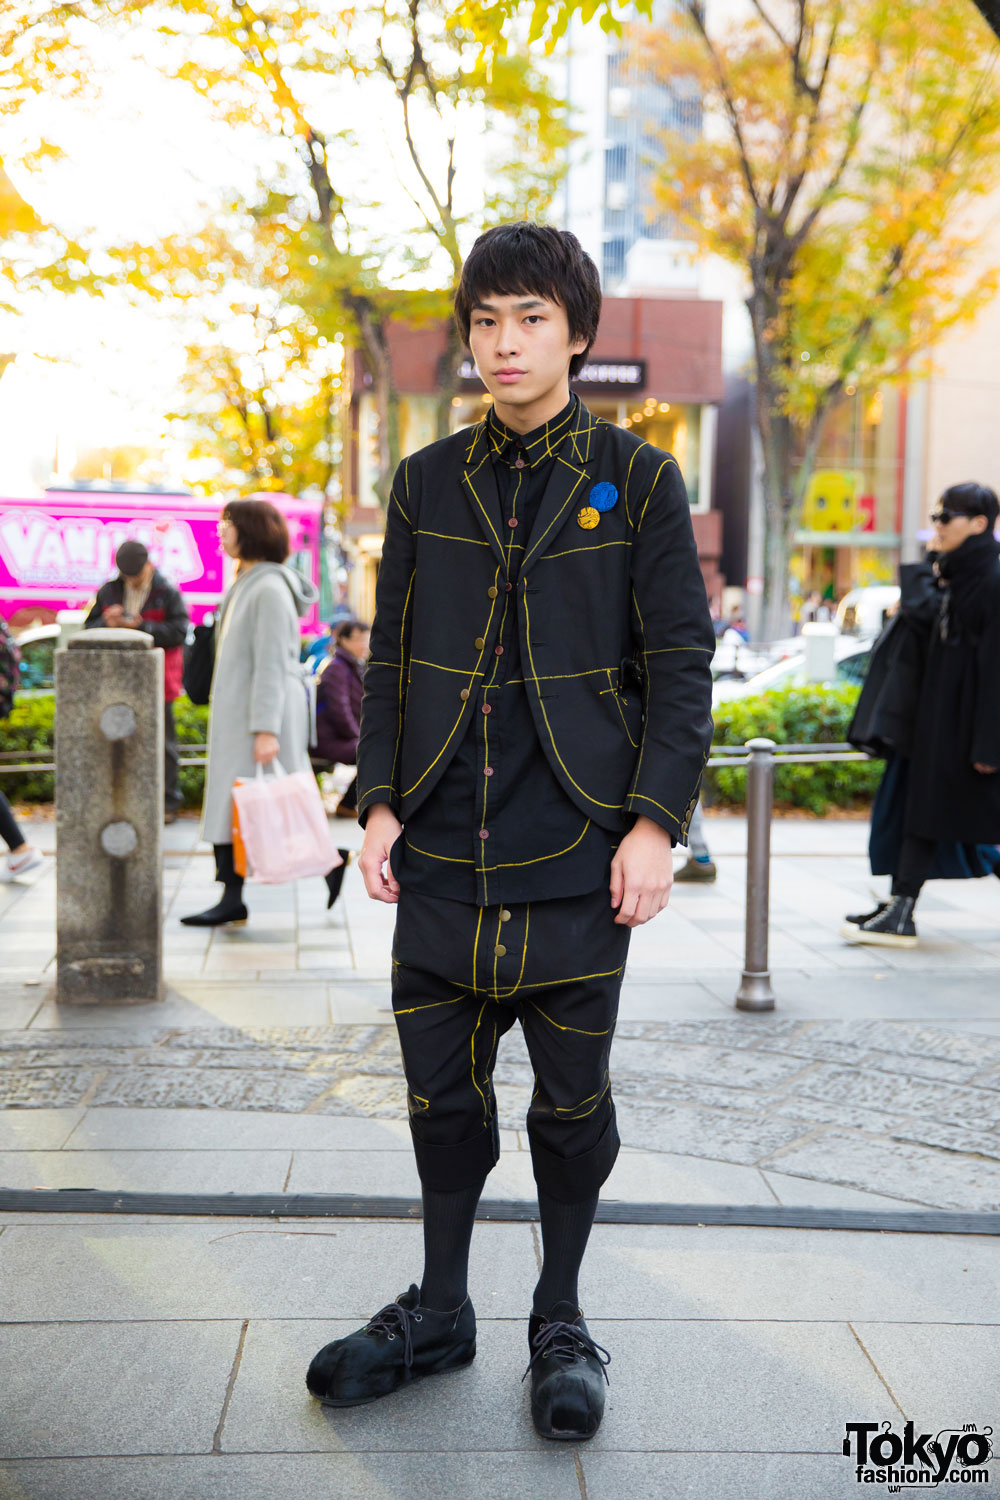 Harajuku Guy in Christopher Nemeth Street Style and Hiro Harajuku Shoes